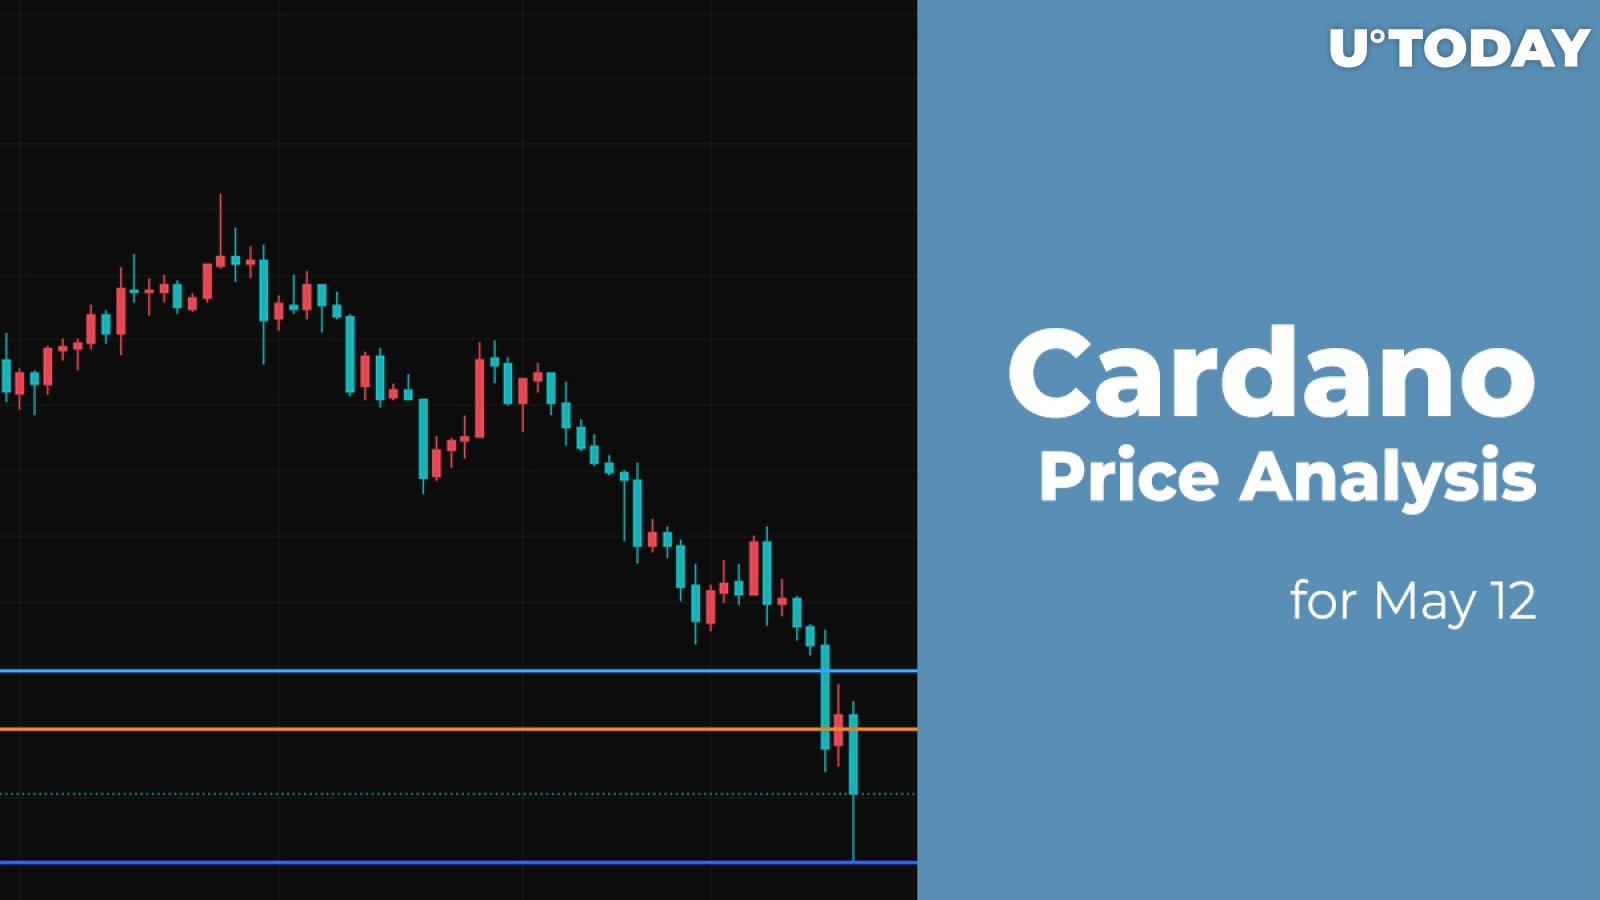 Cardano (ADA) Price Analysis for May 12